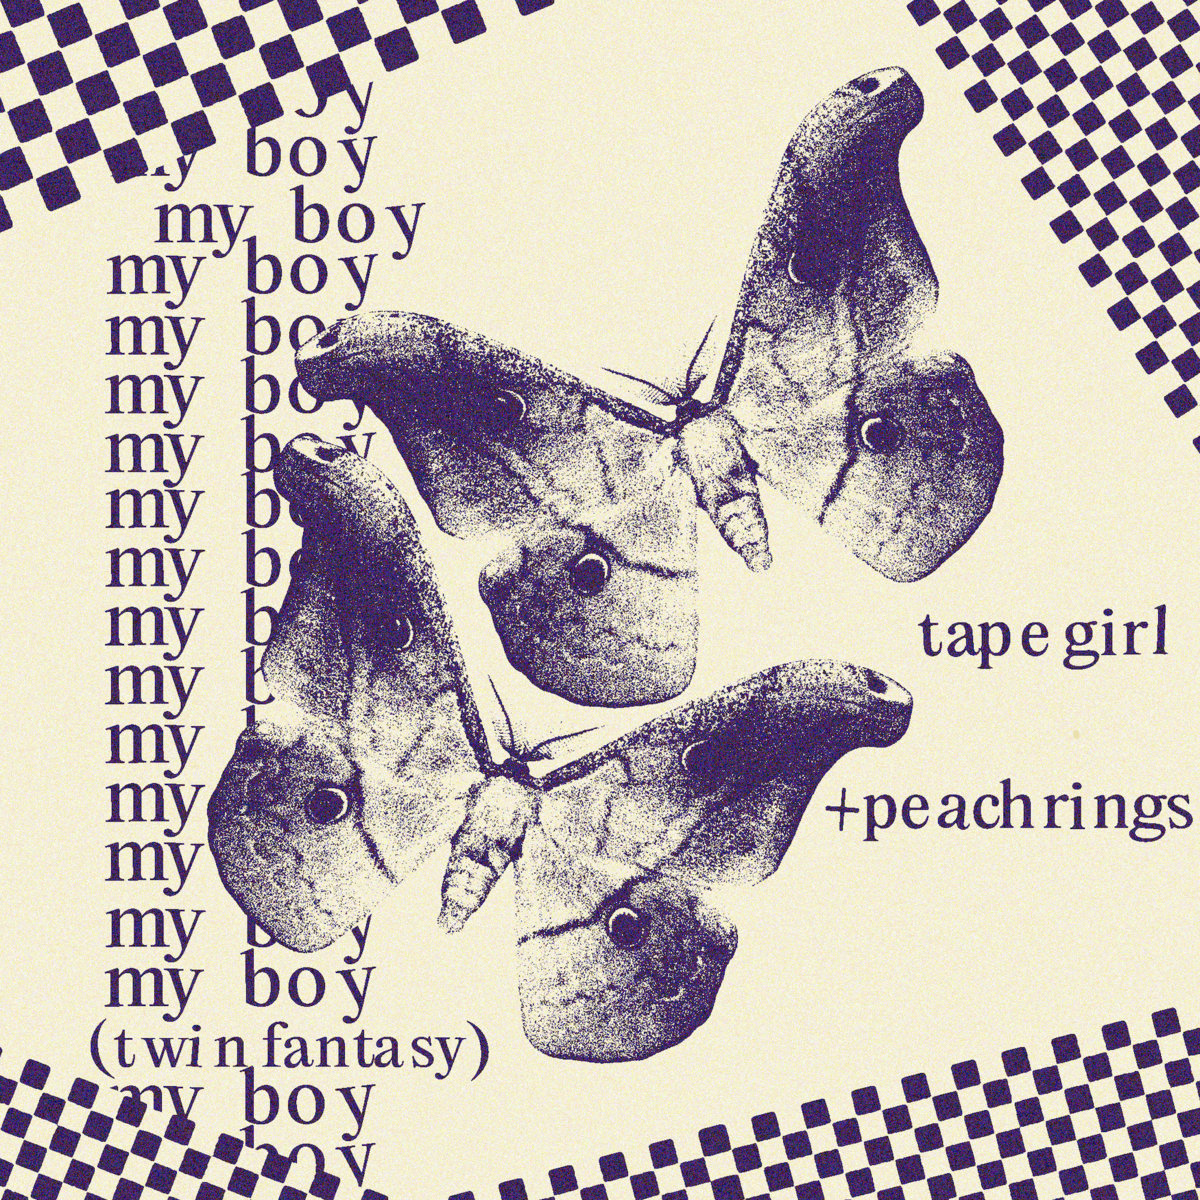 tape girl peach rings single